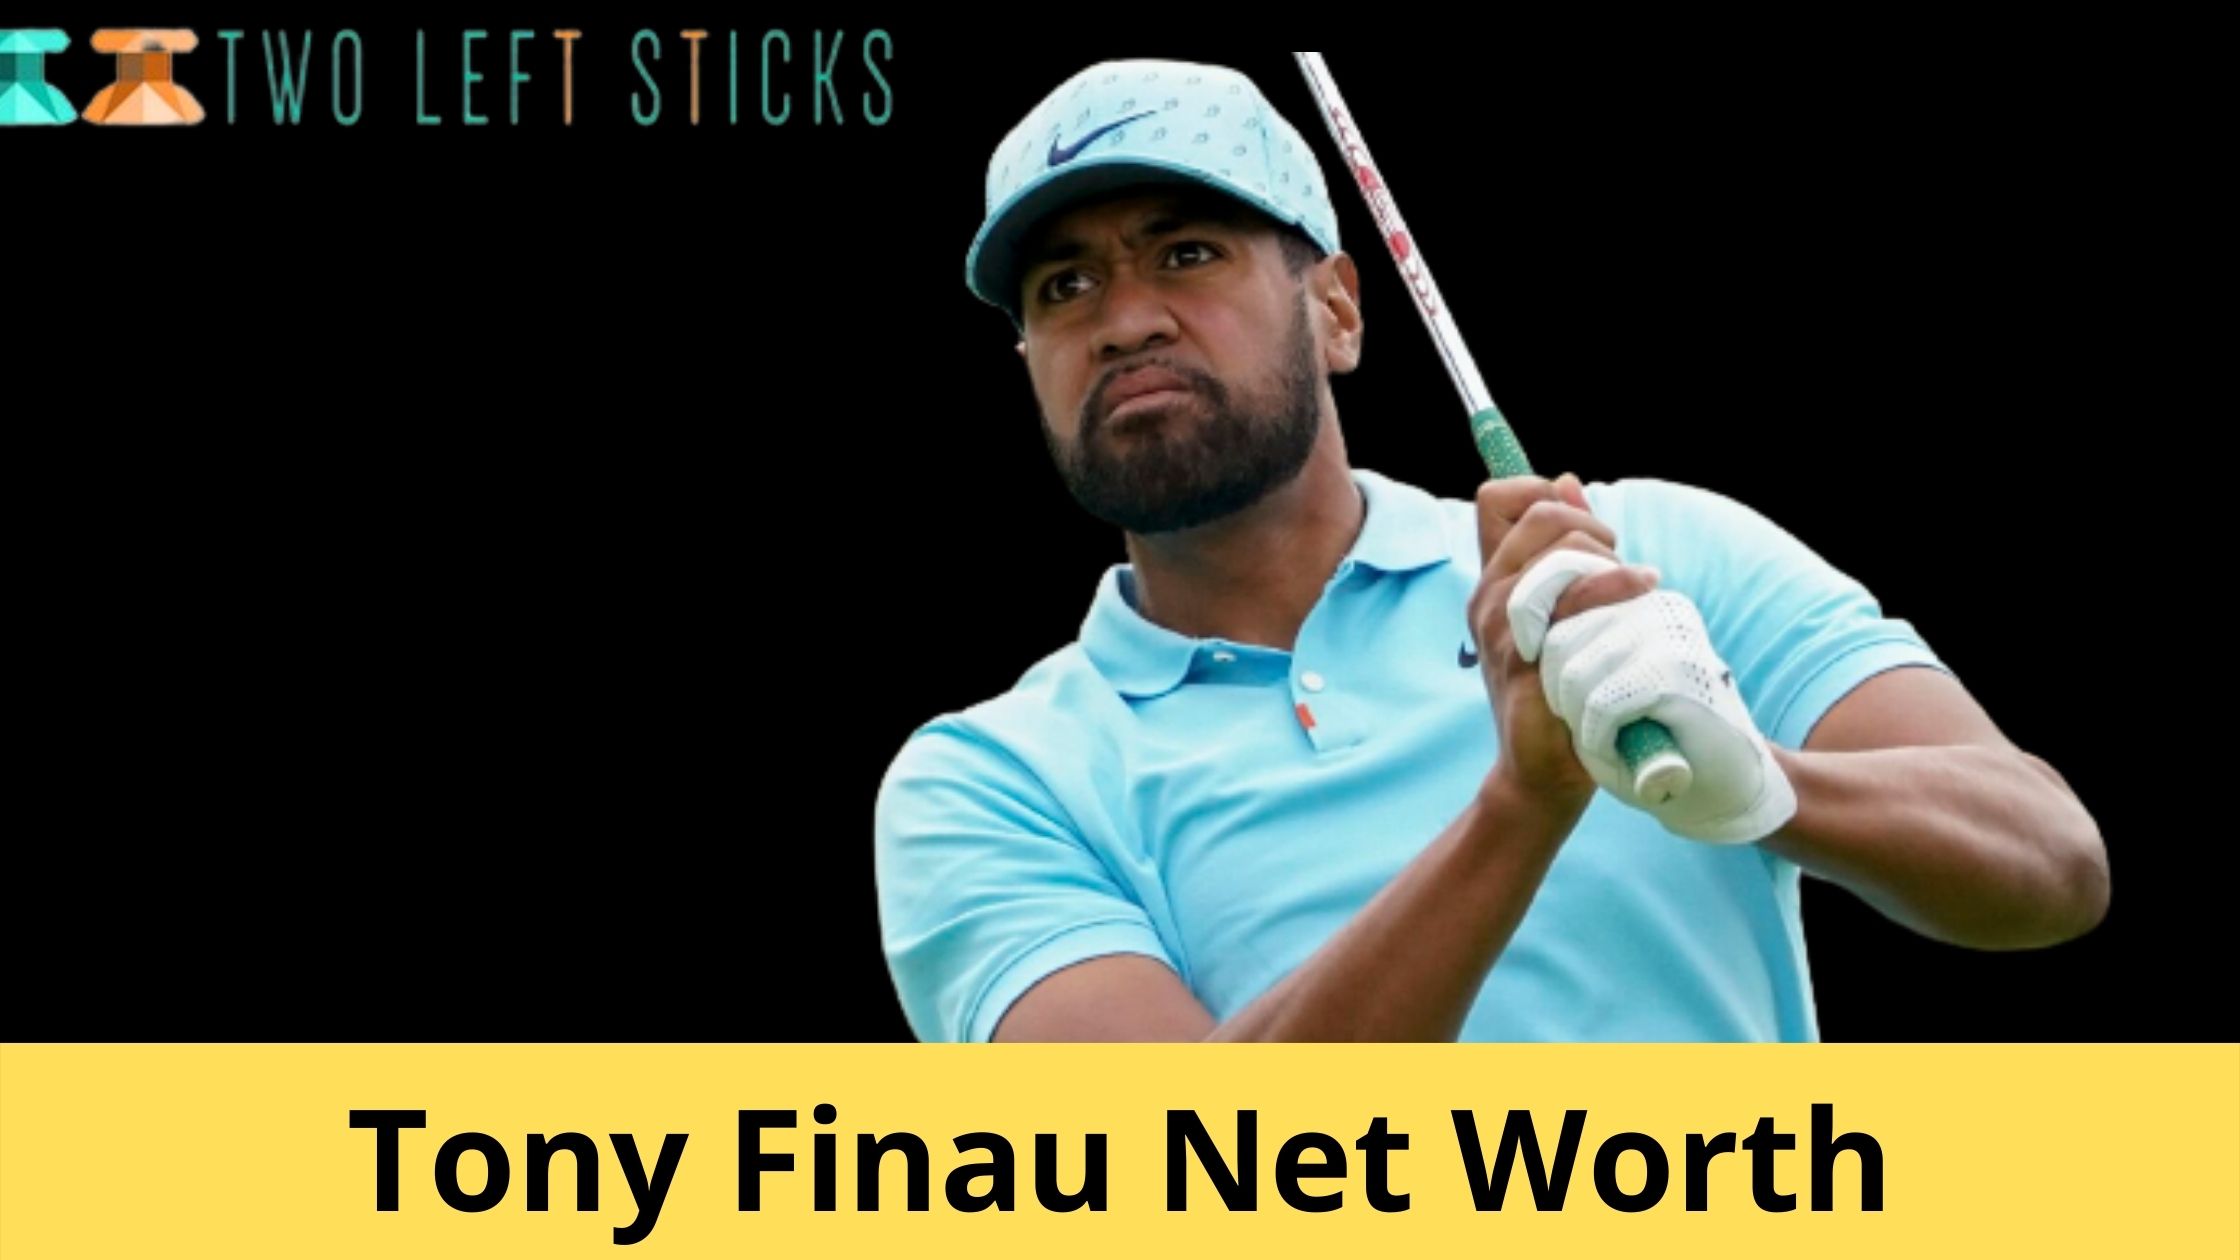 Tony-Finau-Net-Worth-Twoleftsticks(1)